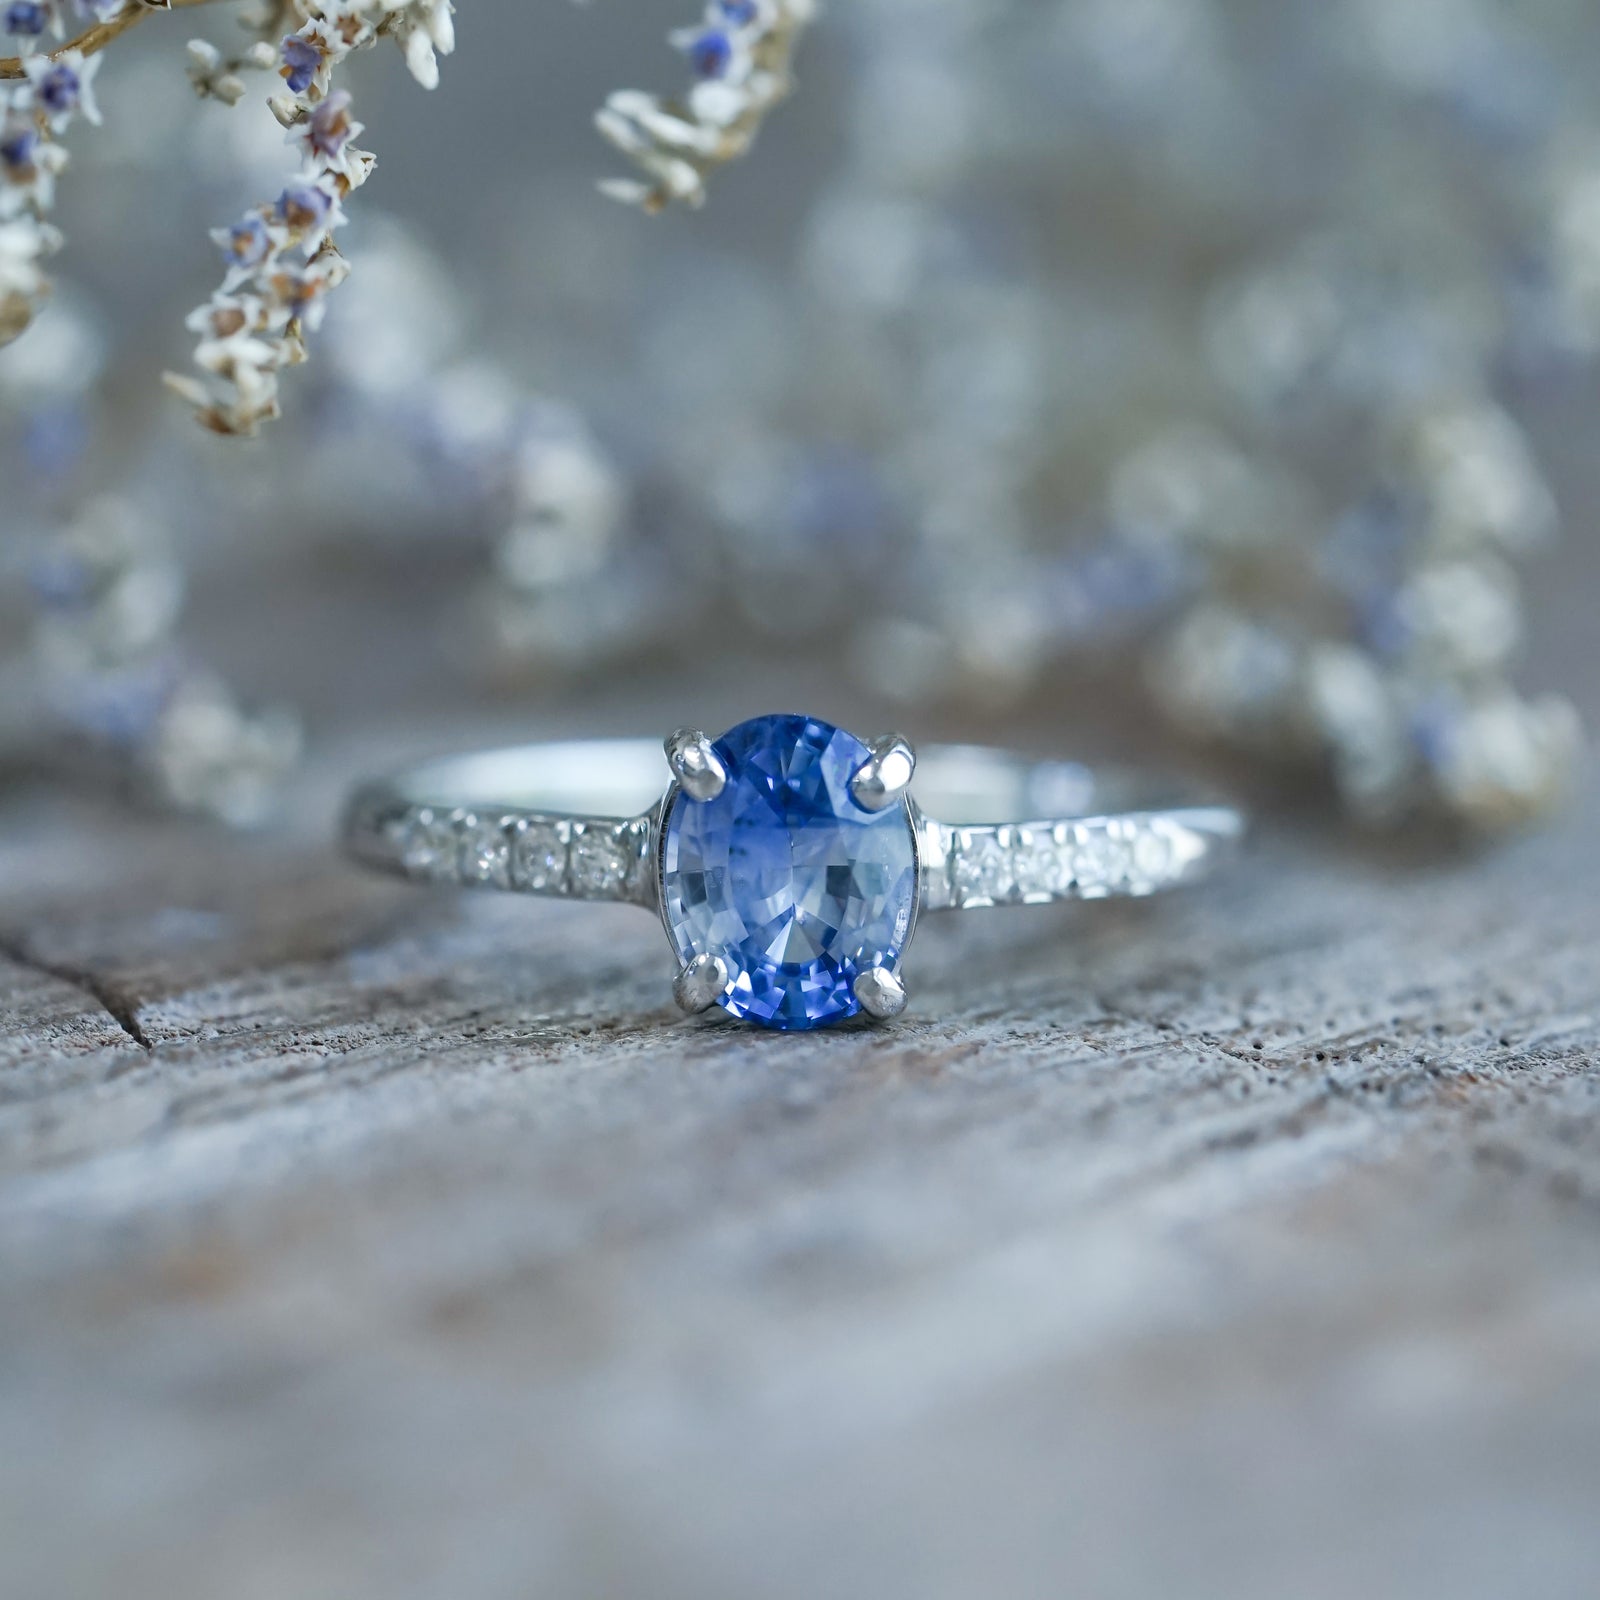 Shop Beautiful Sapphire Engagement Rings | MiaDonna